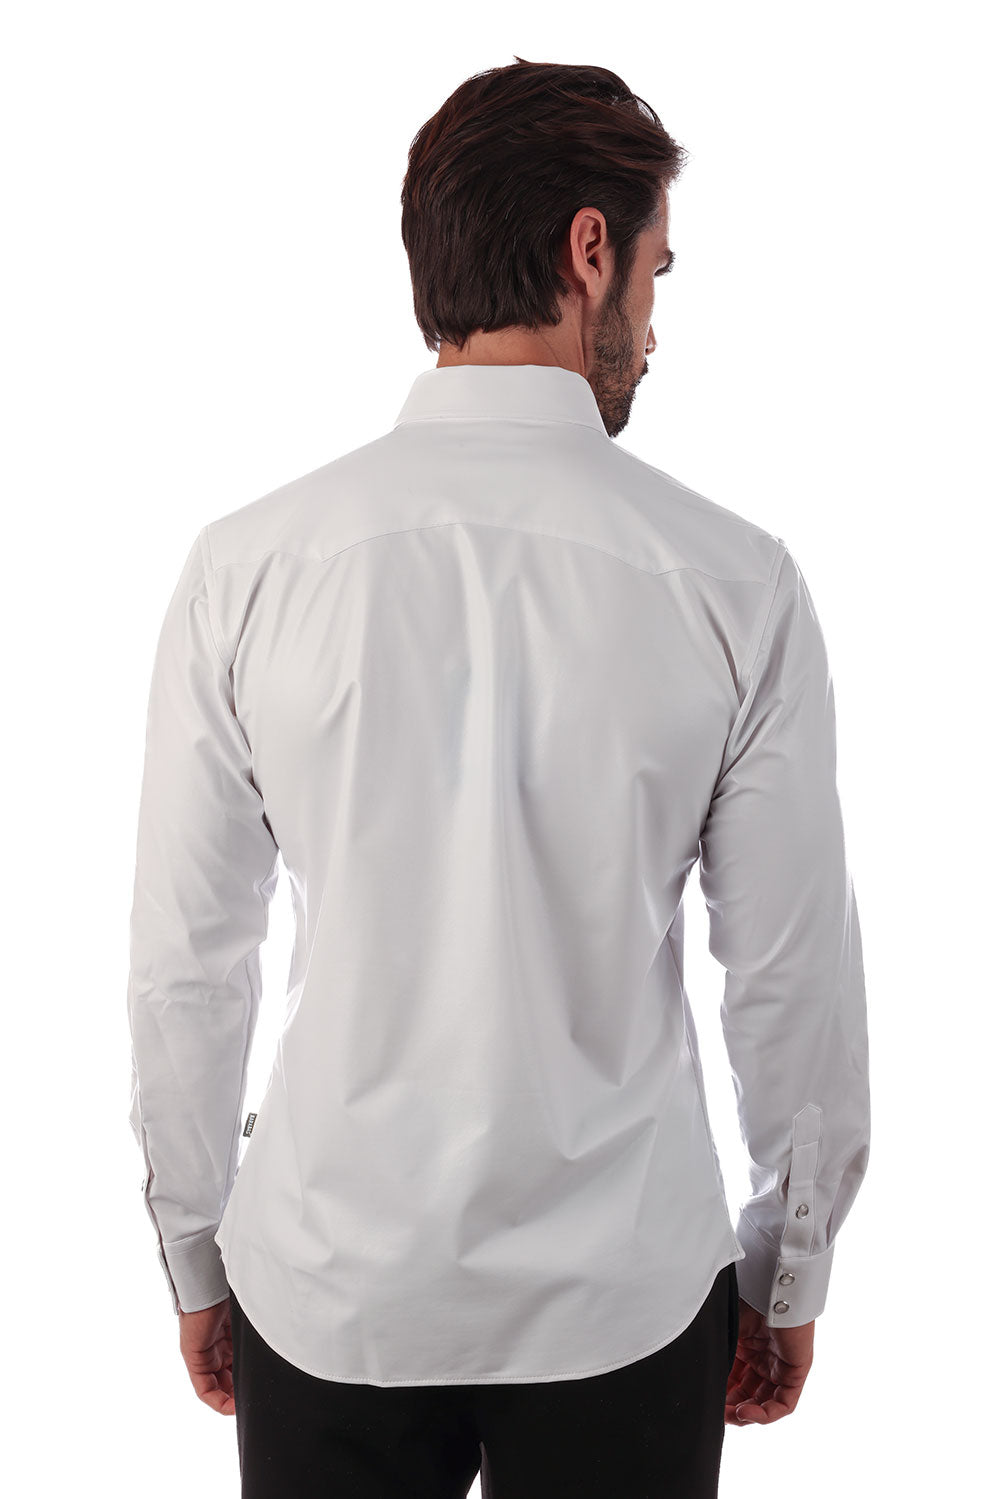 BARABAS Men's Shiny Metallic Stretch Long Sleeve Shirts 3B28 White